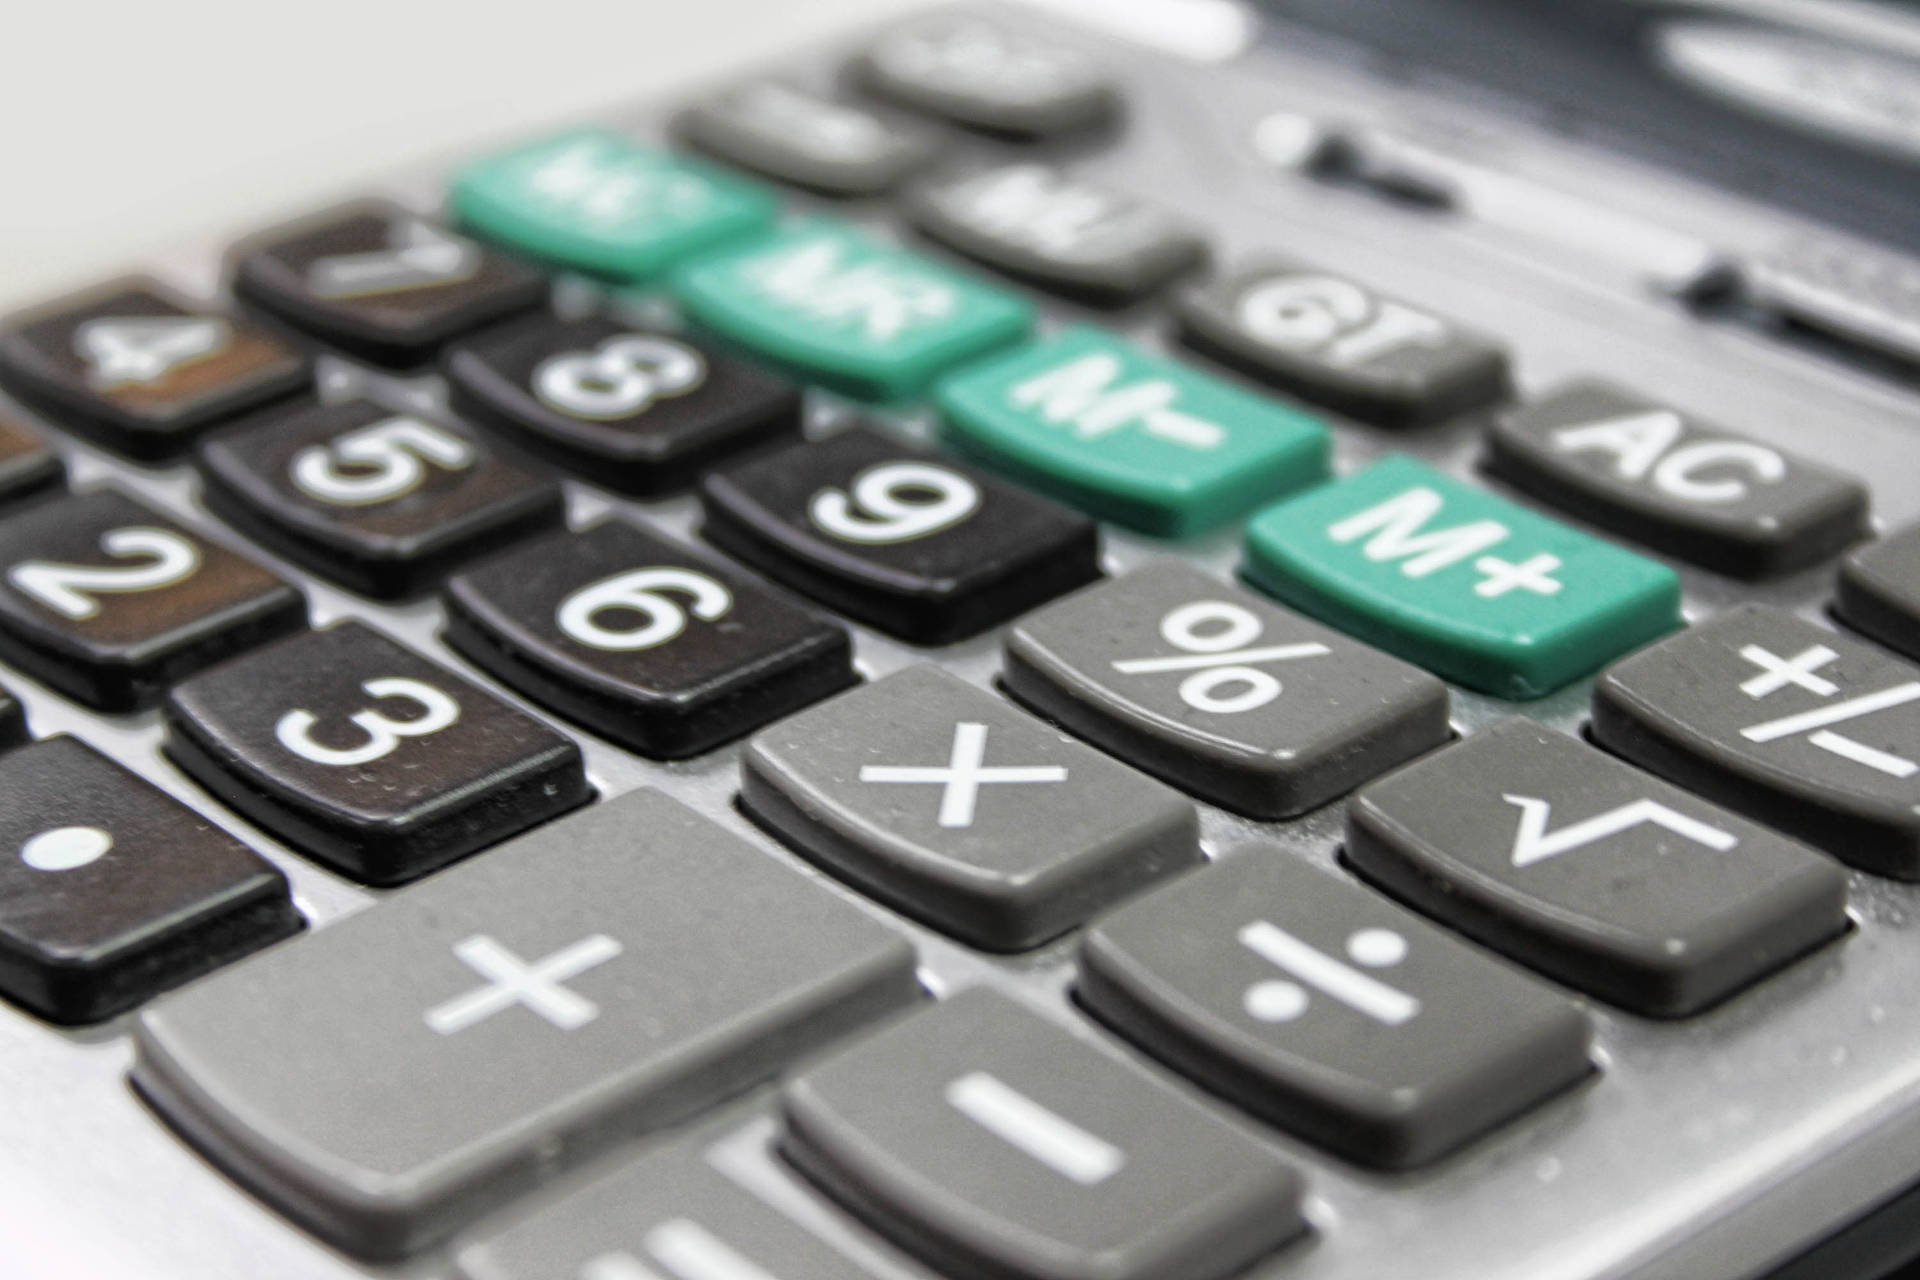 Calculator Keypad Close-up Picture